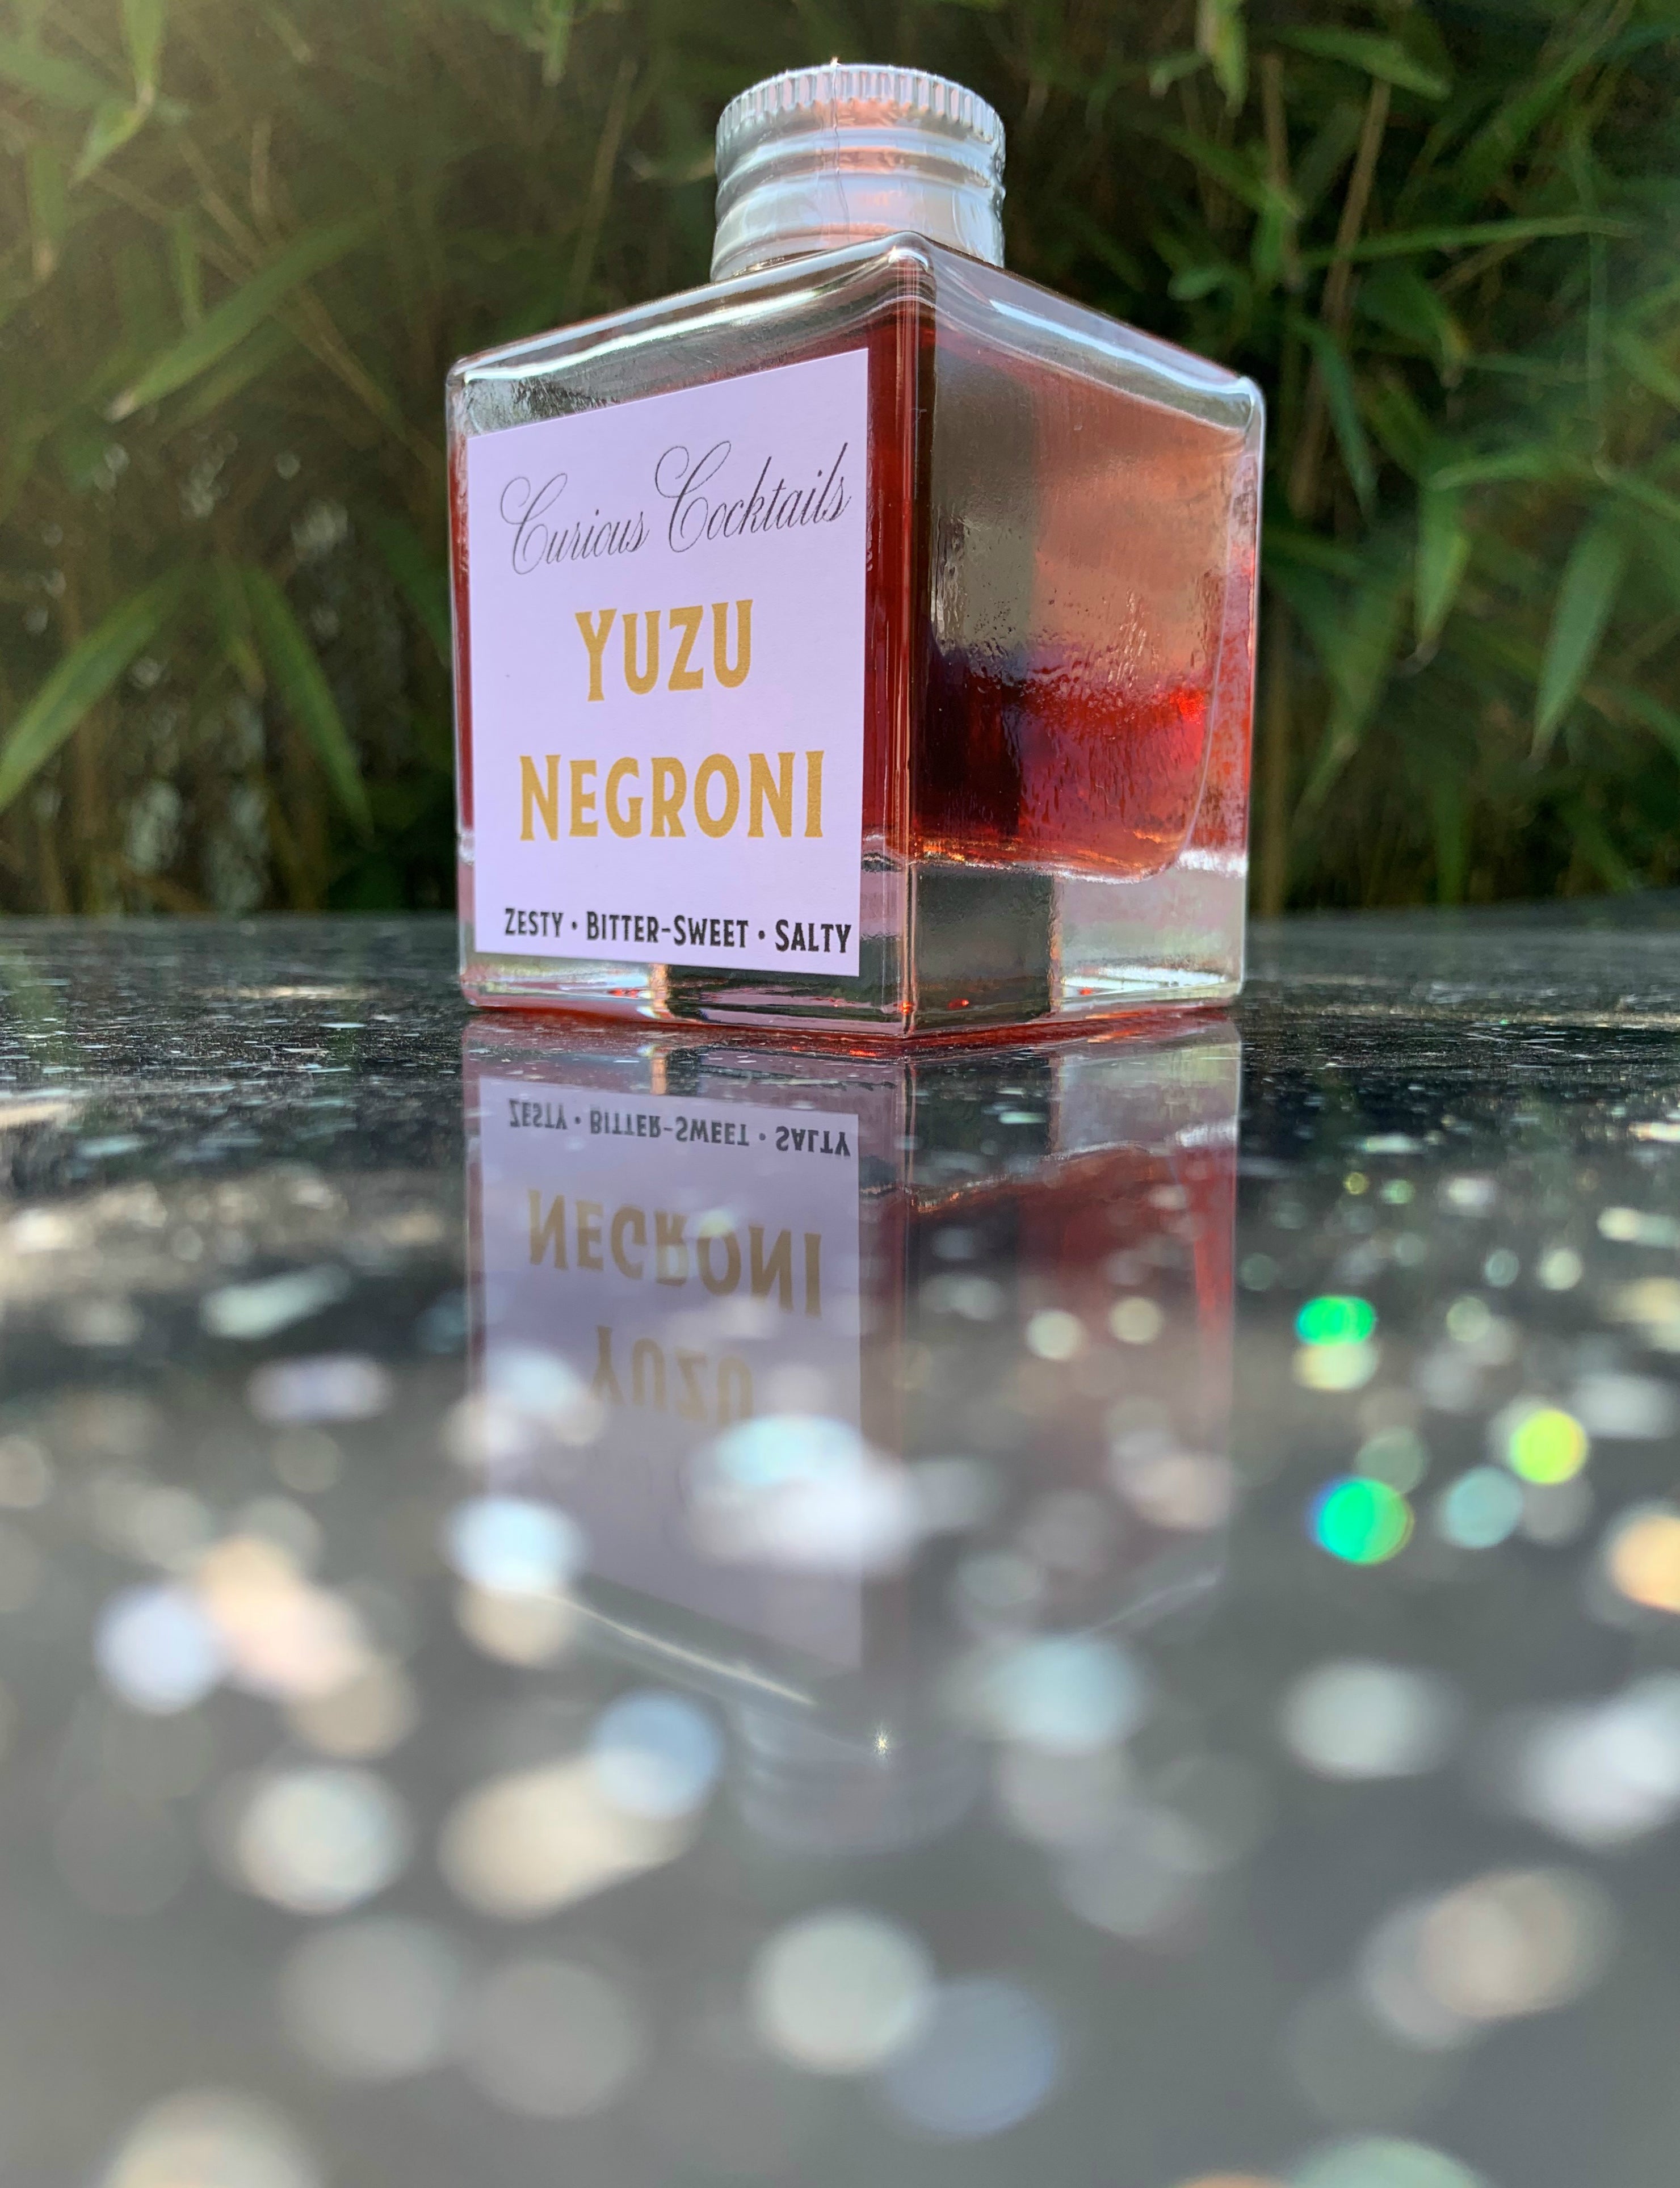 Curious Cocktails: Yuzu Negroni